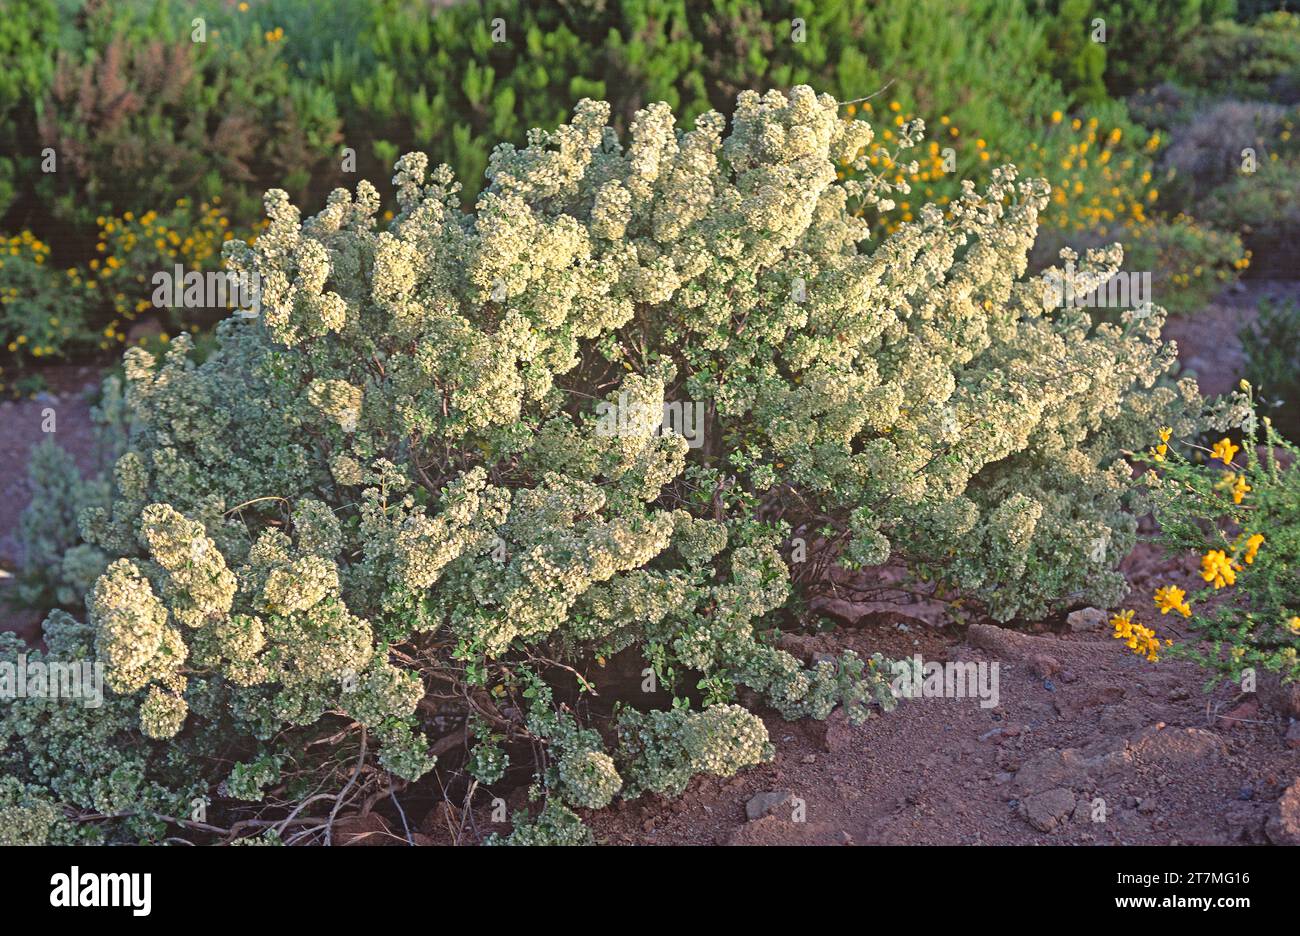 Poleo de pinar (Bystropogon origanifolius) is an aromatic shrub endemic to Canary Islands except Lanzarote and Fuerteventura. Stock Photo